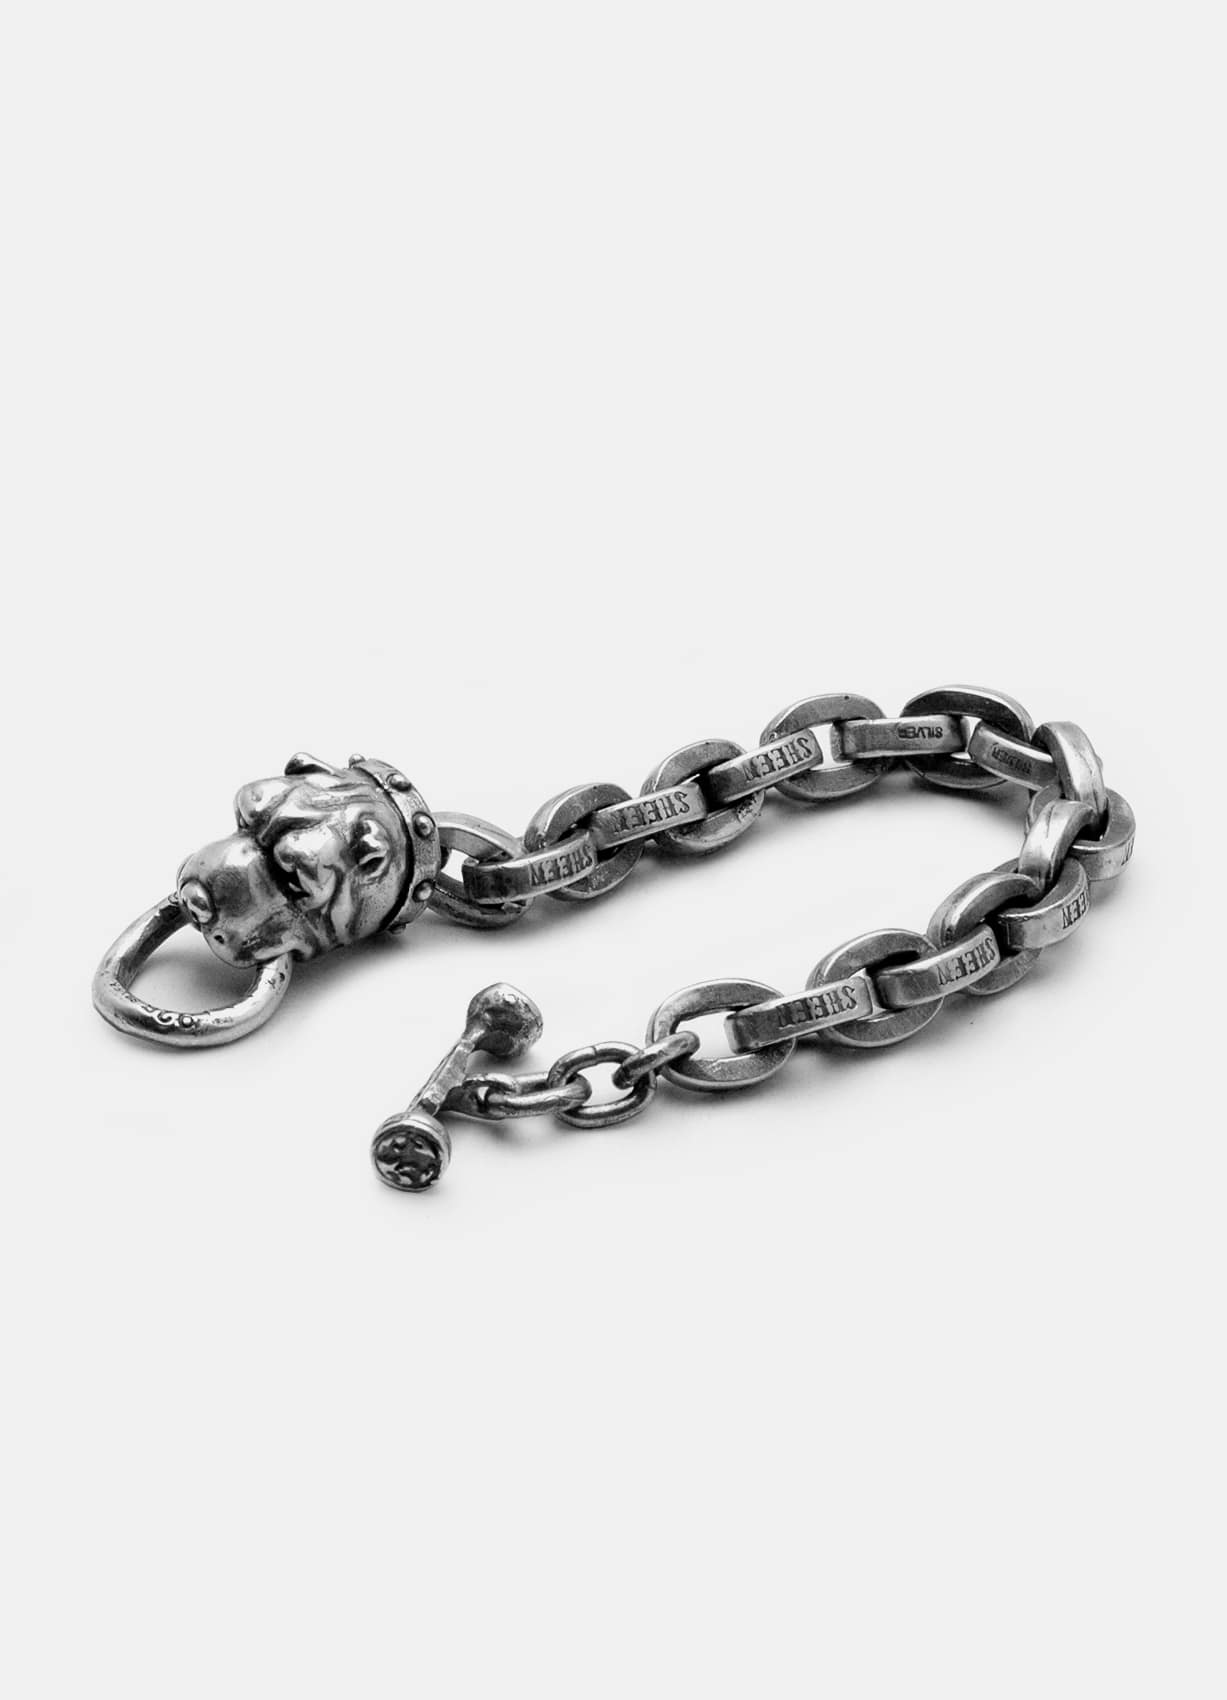 Crazy Dog Bracelet (Big Chain)